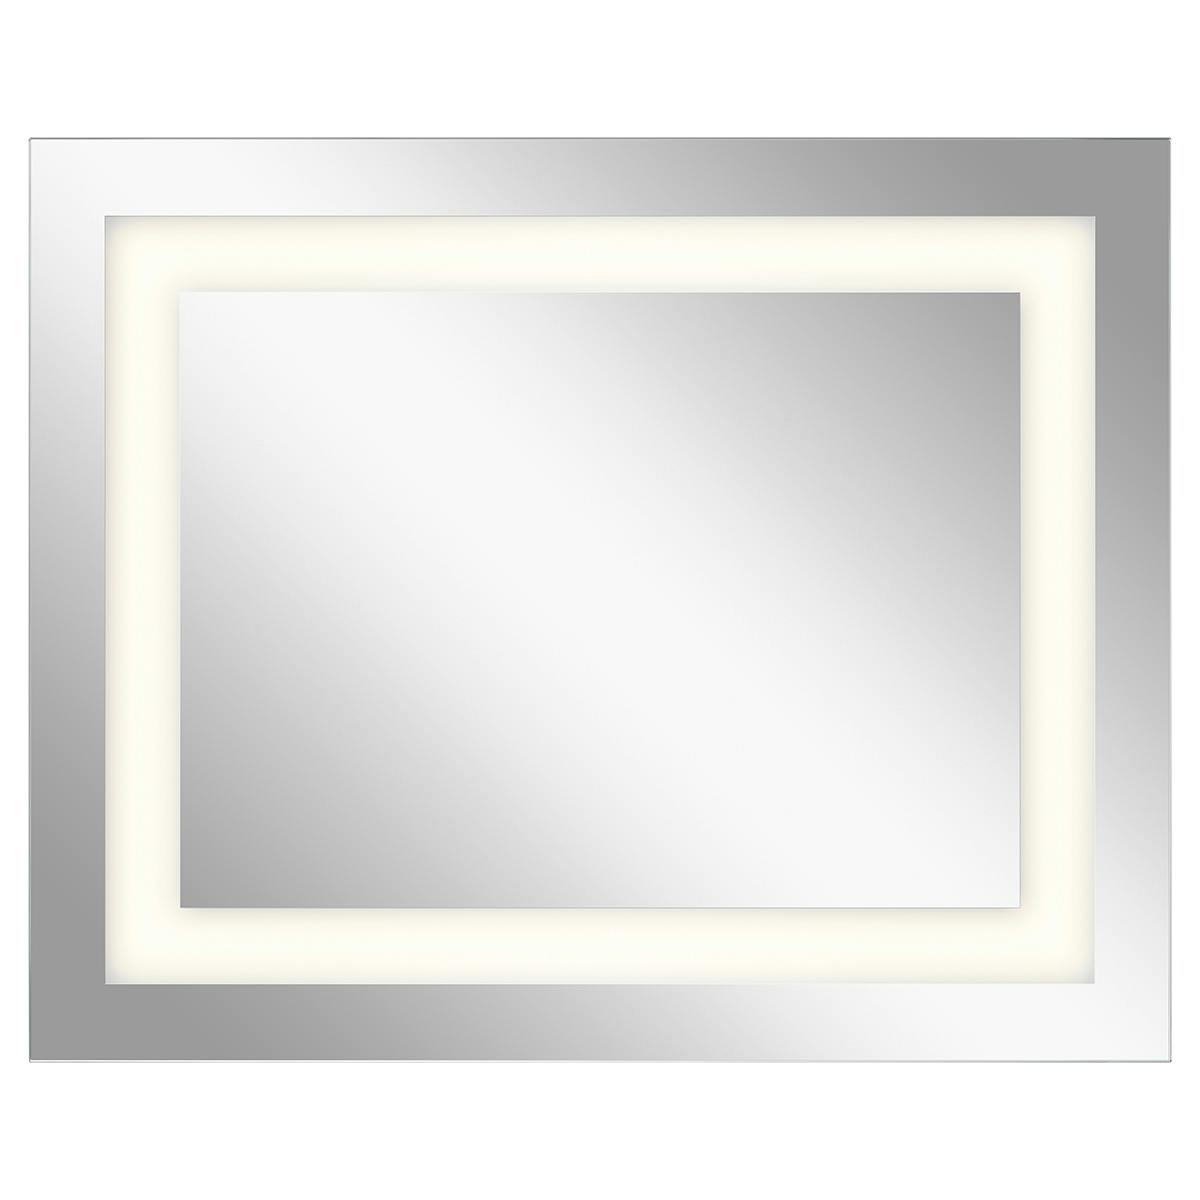 40" x 32" Rectangular LED Backlit Mirror on a white background